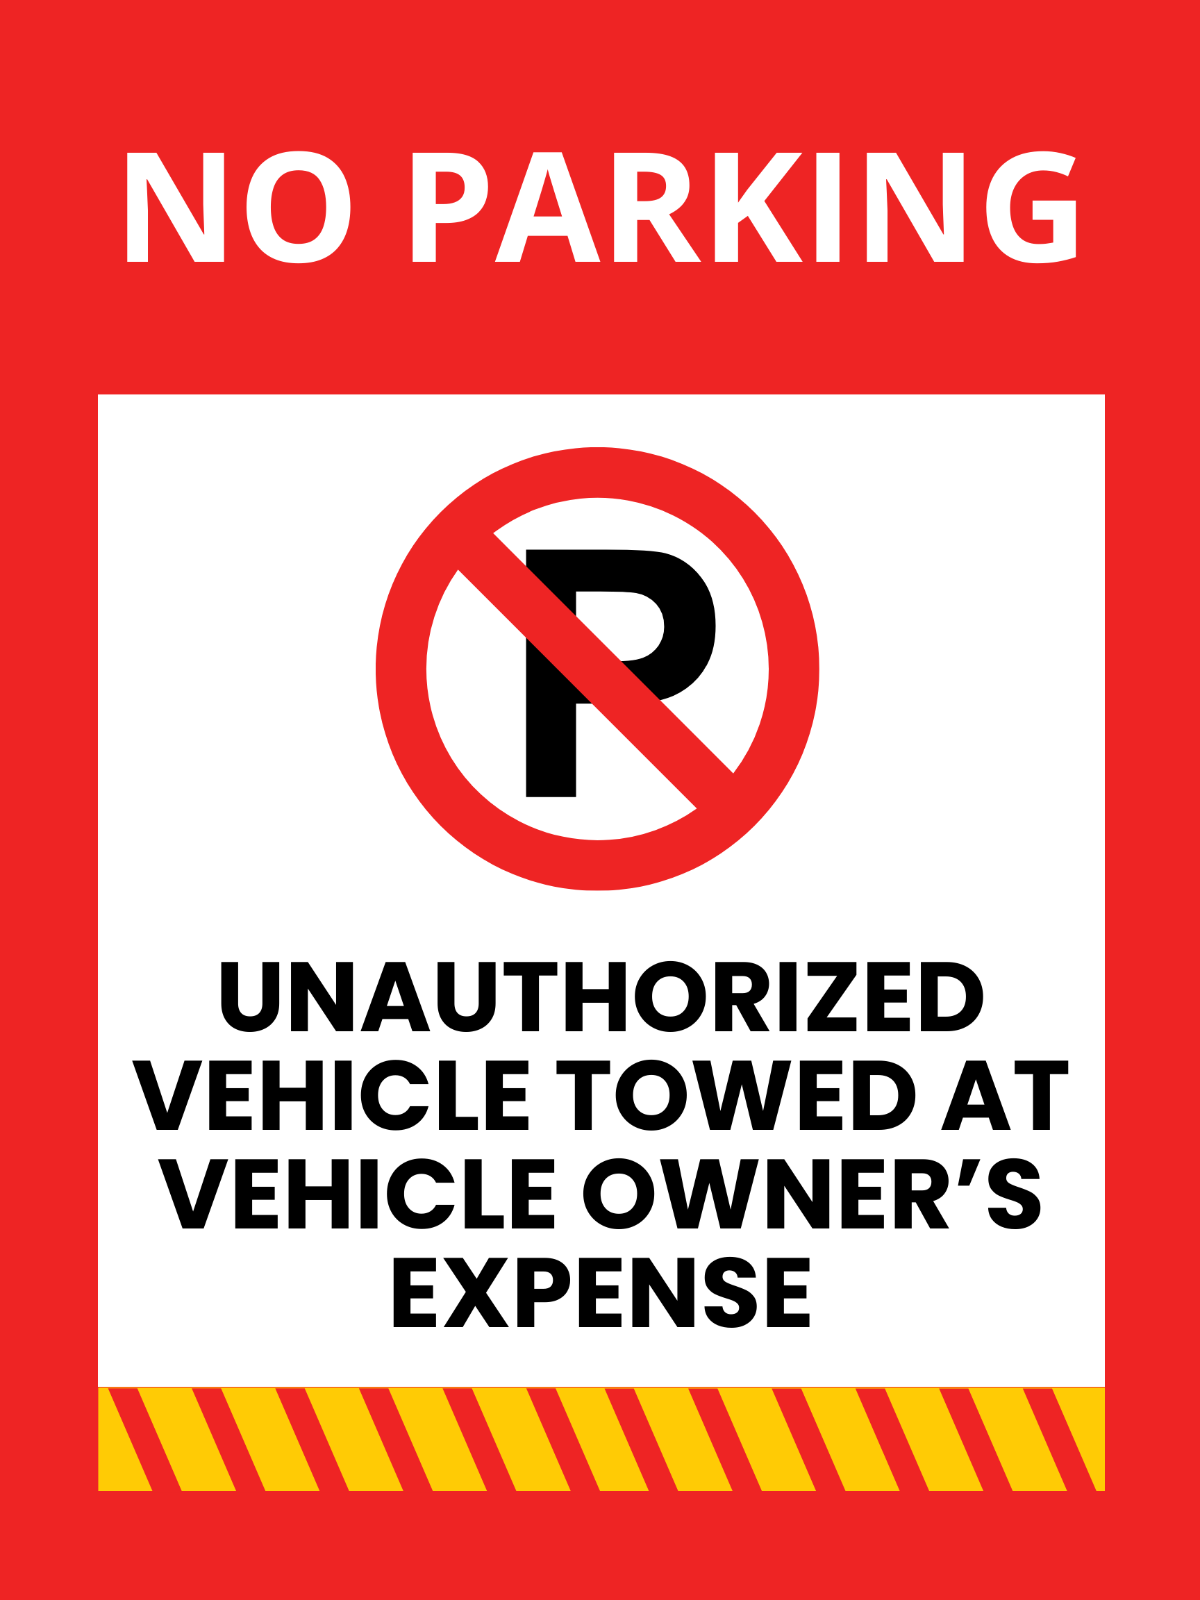 Construction Site Parking Sign